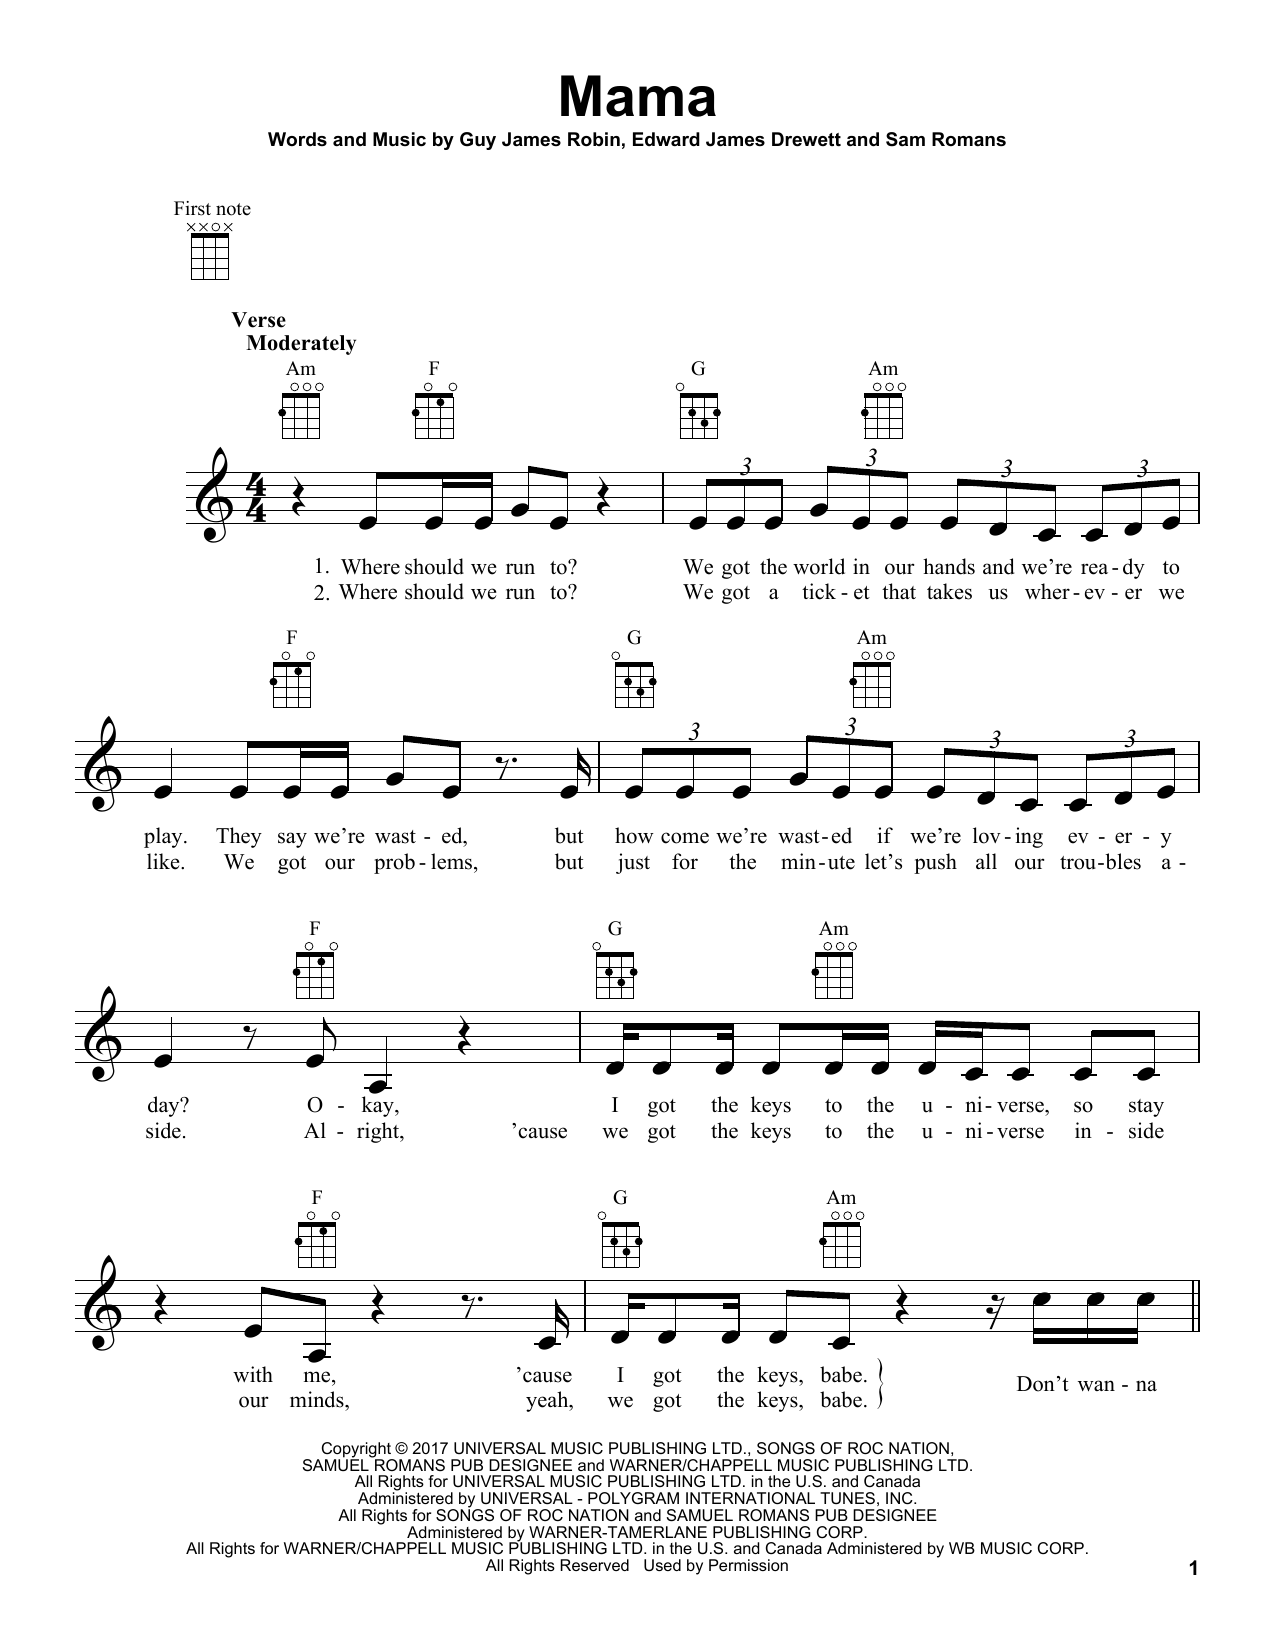 Jonas Blue Mama (feat. William Singe) Sheet Music Notes & Chords for Beginner Ukulele - Download or Print PDF